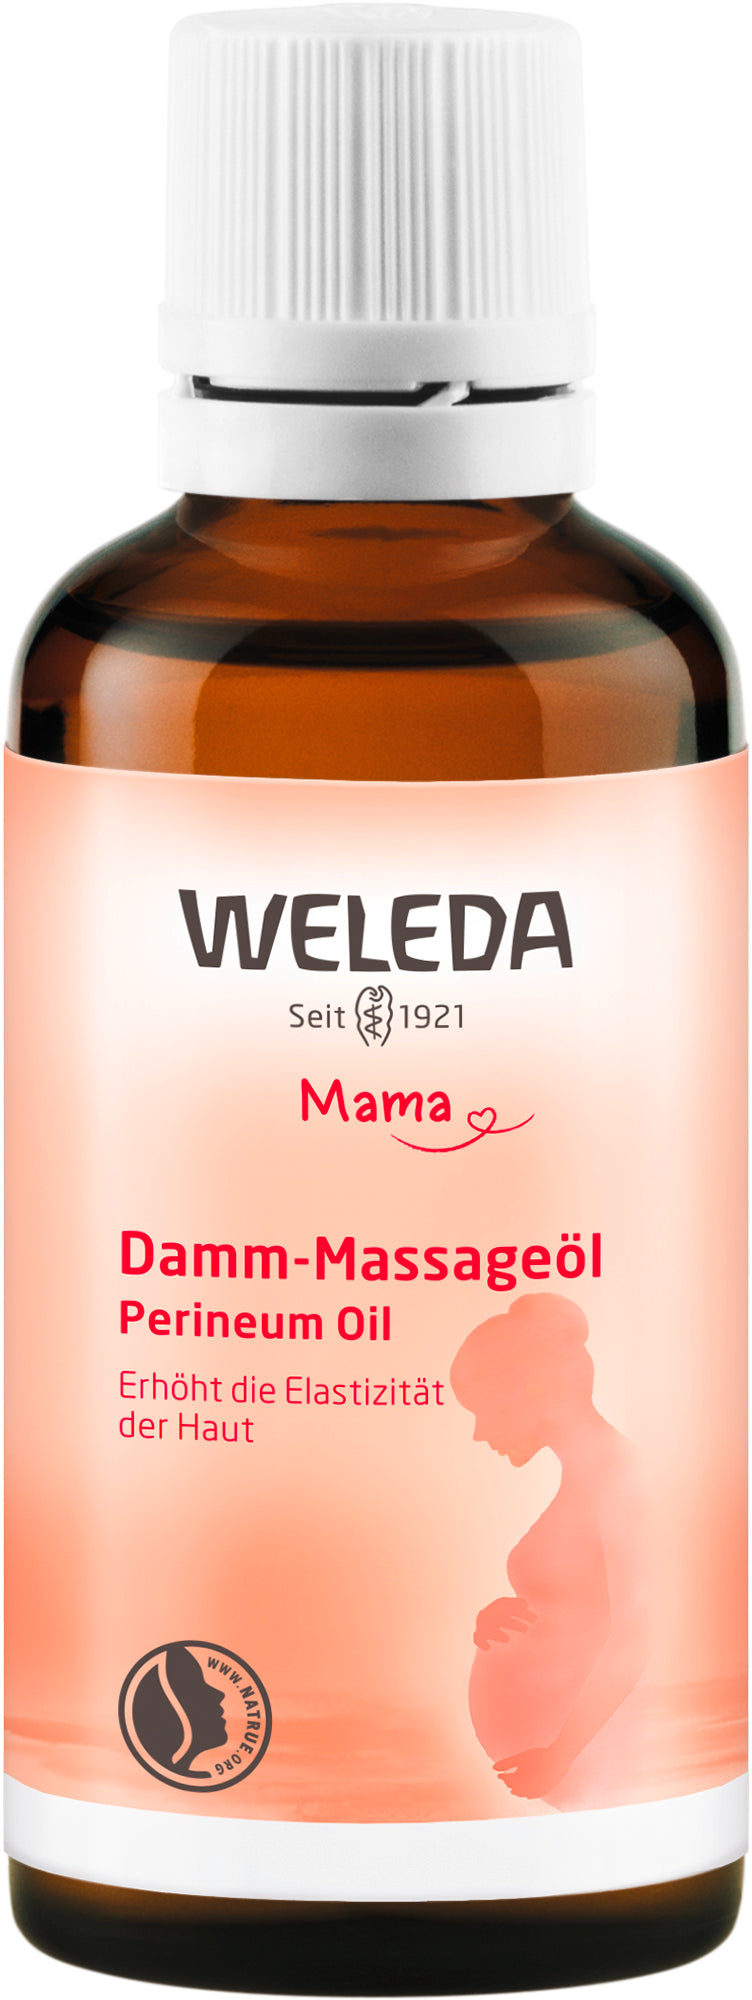 Weleda - Damm-Massageöl 50ml